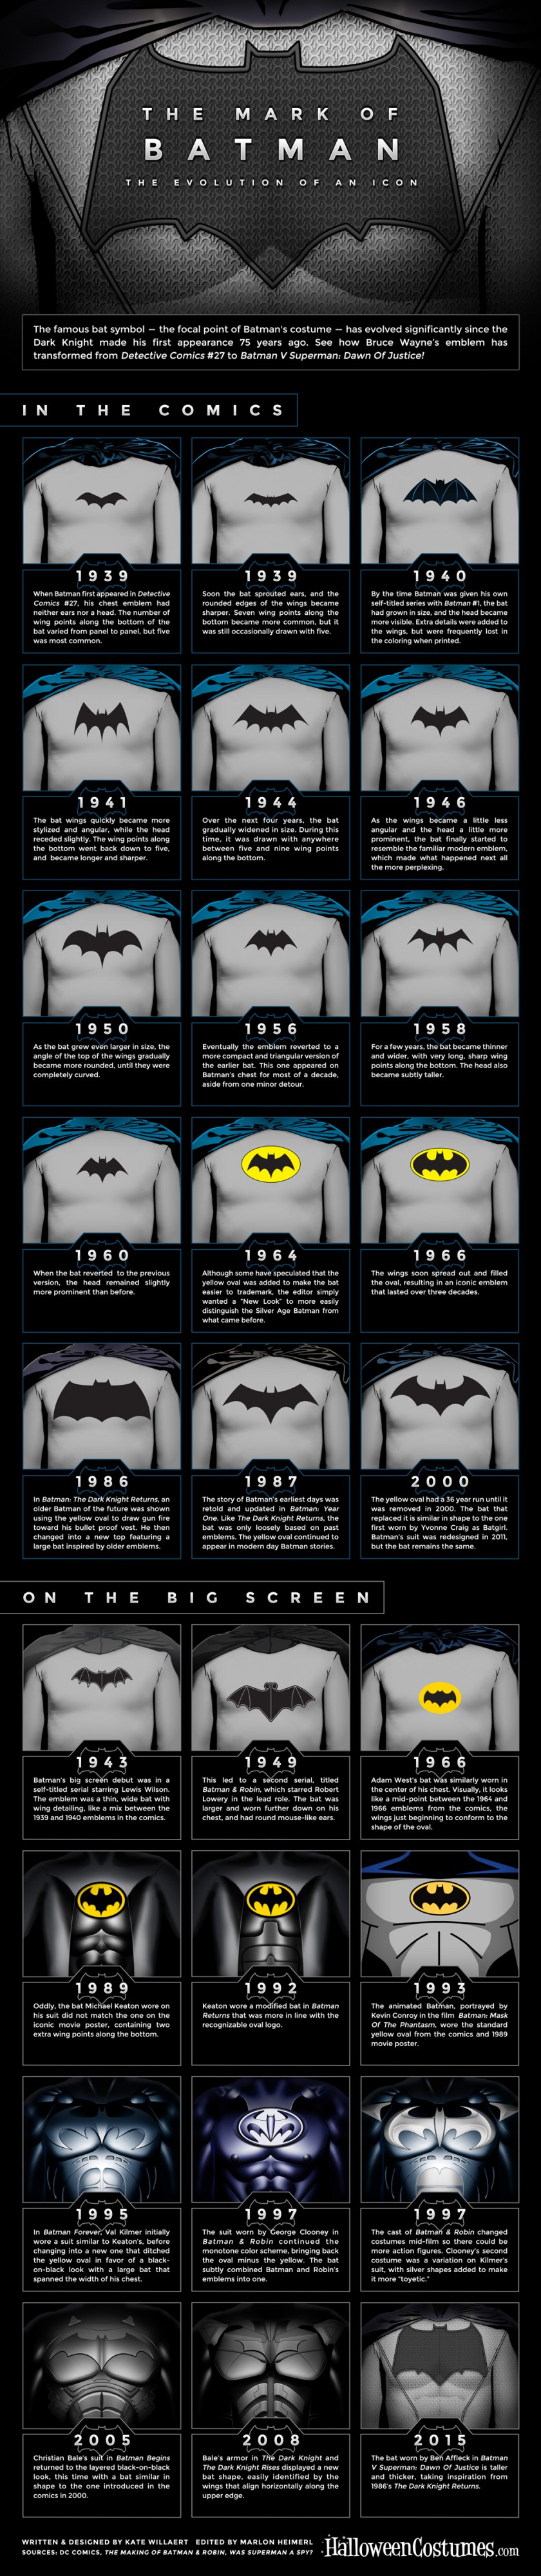 The mark of Batman - Infographic HalloweenCostumes